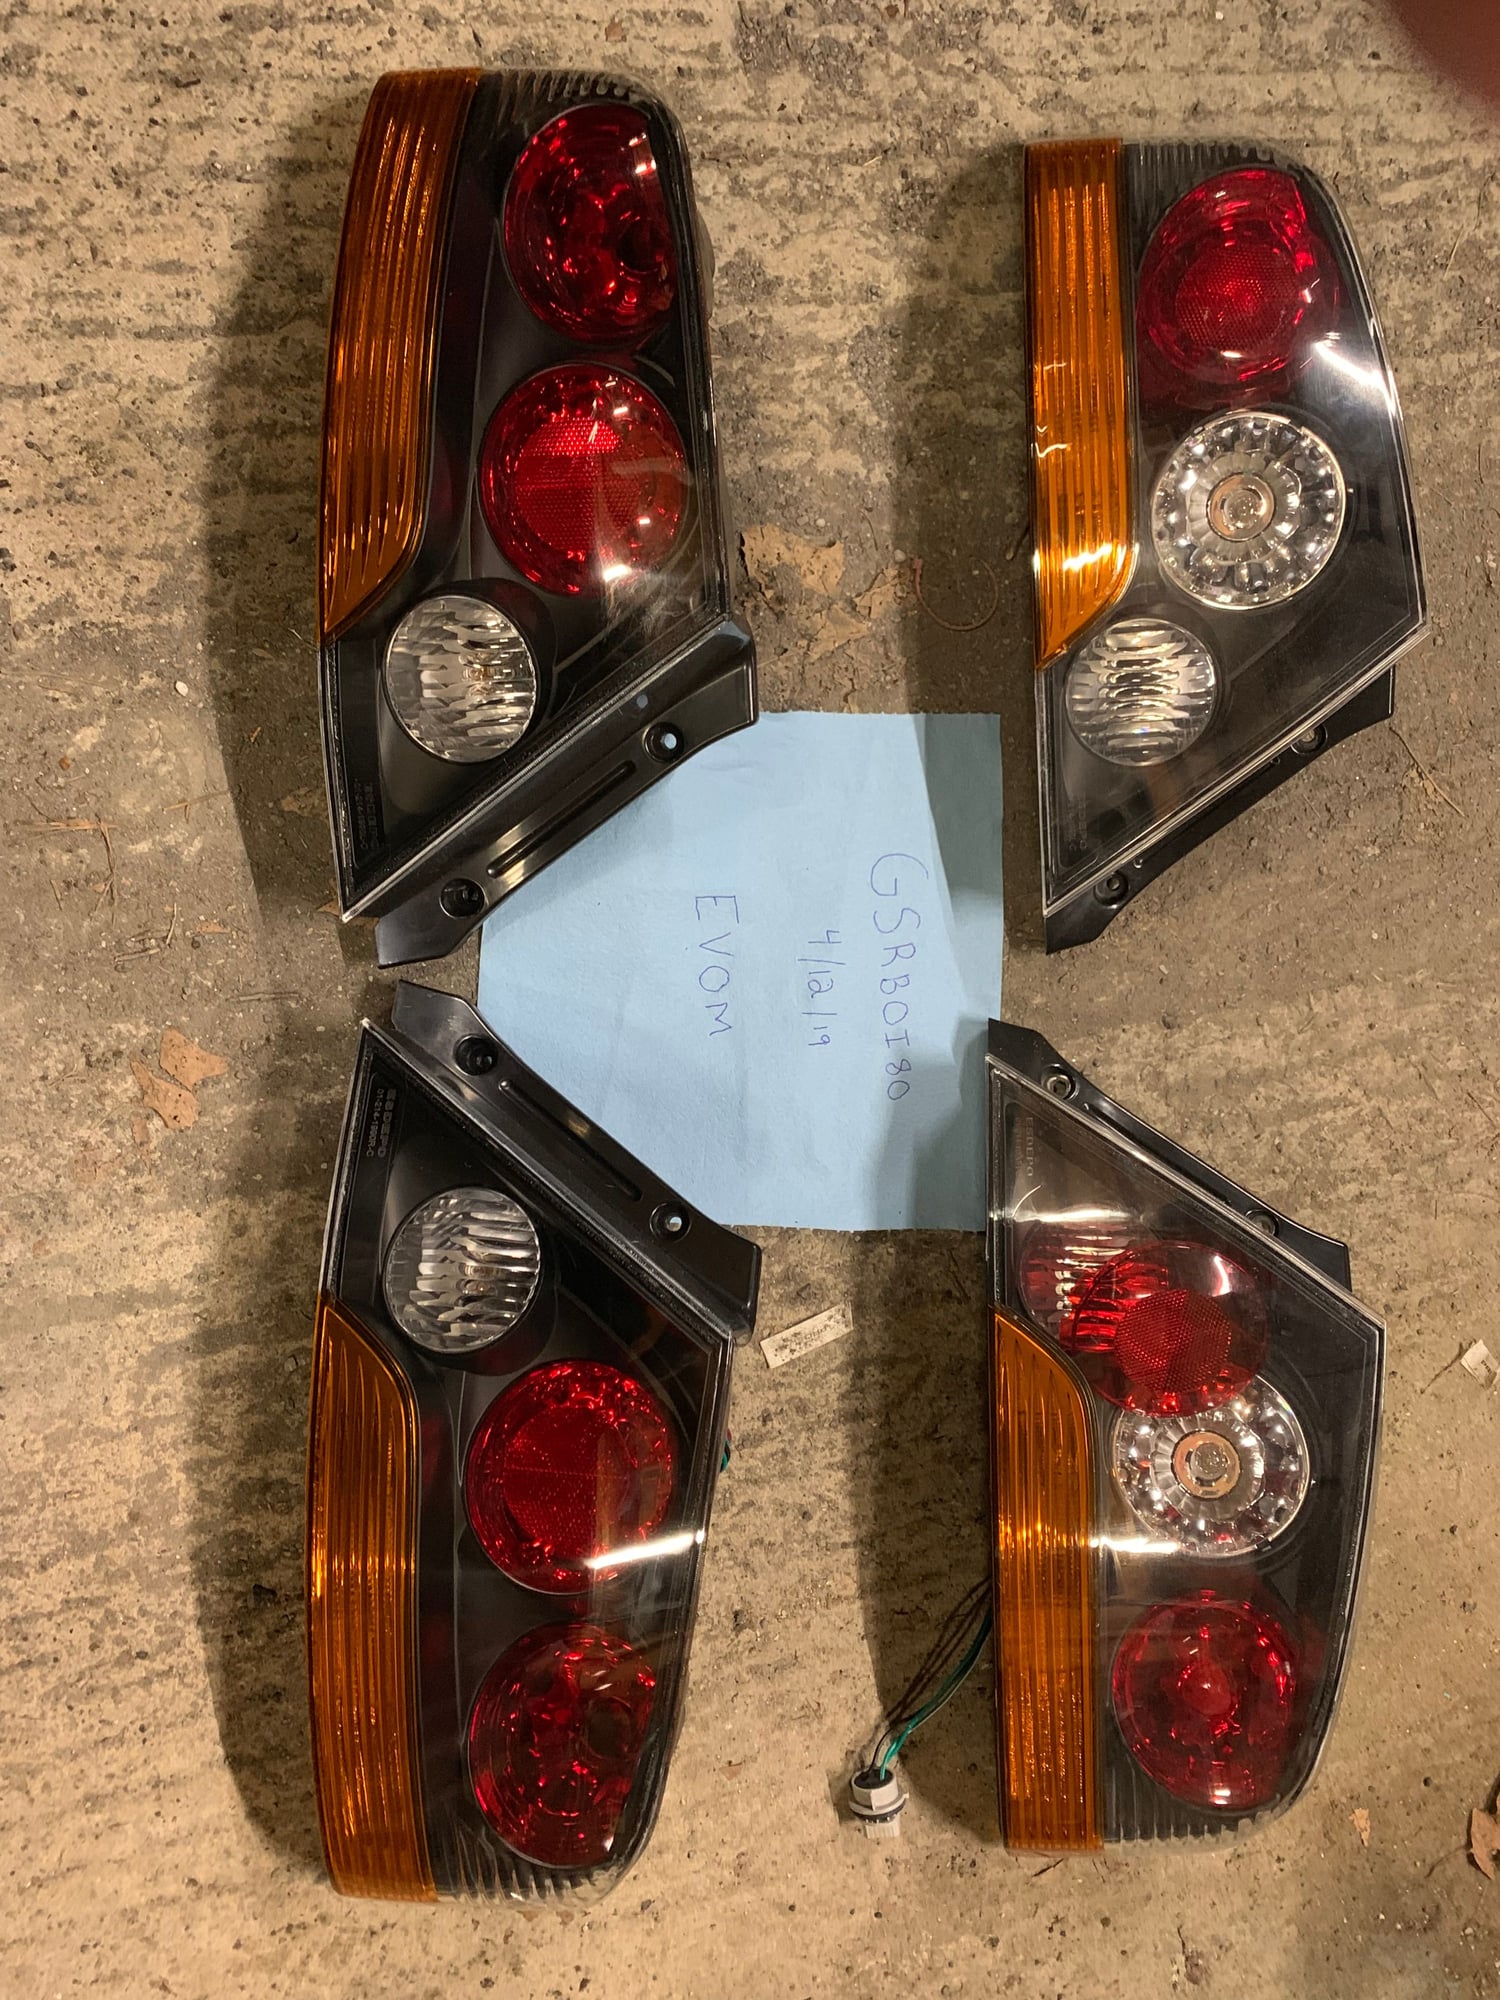 Lights - FS: DEPO Rear Taillights (2 sets) - Used - 2002 to 2006 Mitsubishi Lancer Evolution - East Stroudsburg, PA 18302, United States